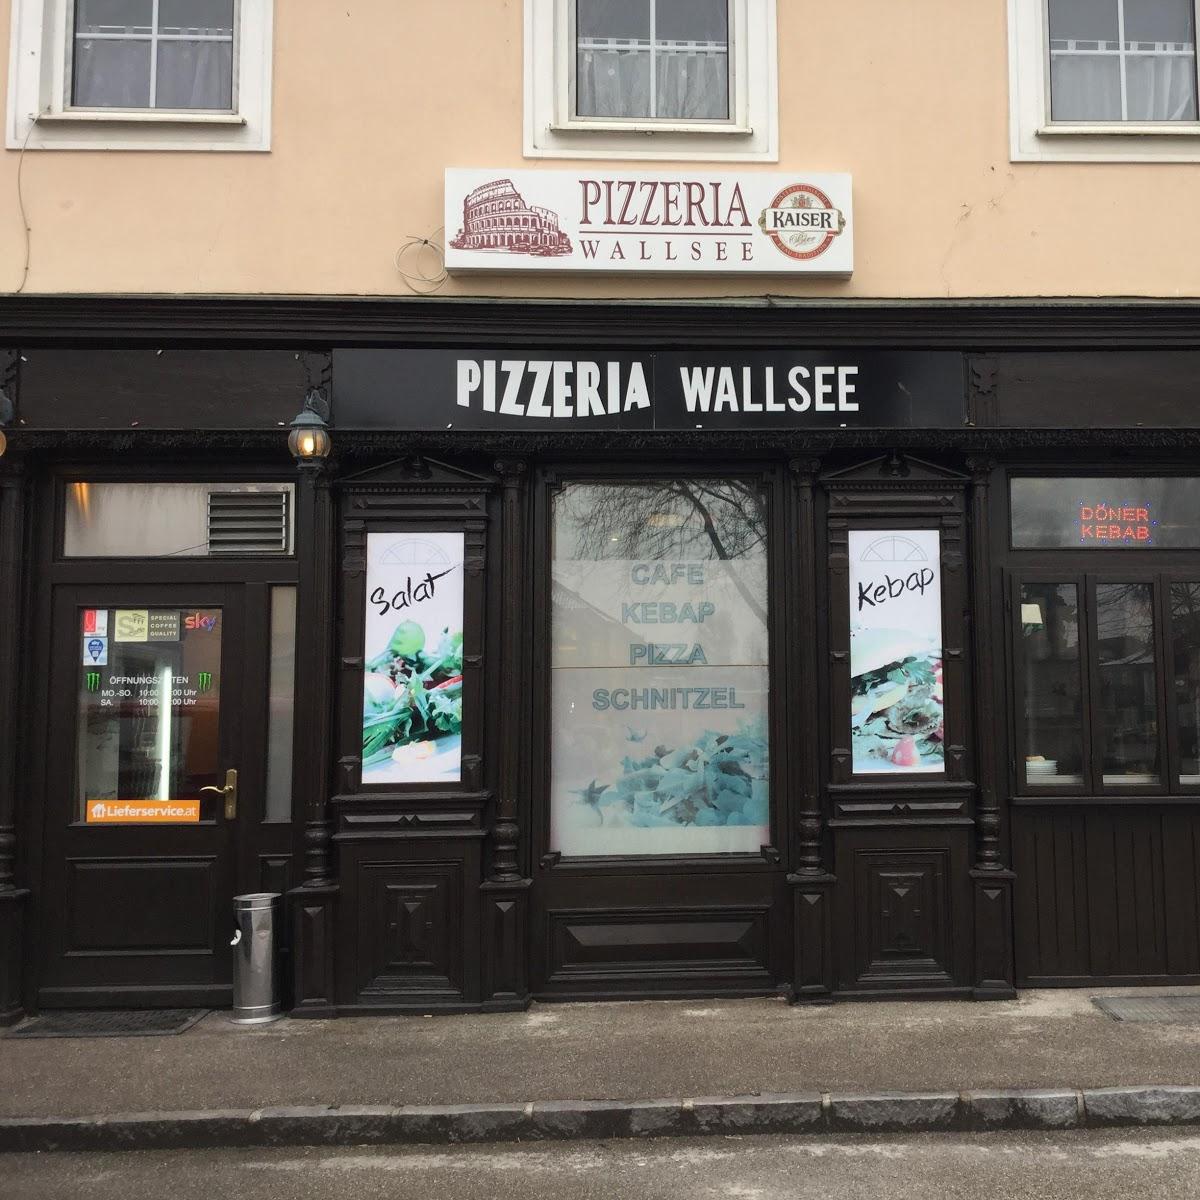 Restaurant "Pizzeria" in Wallsee